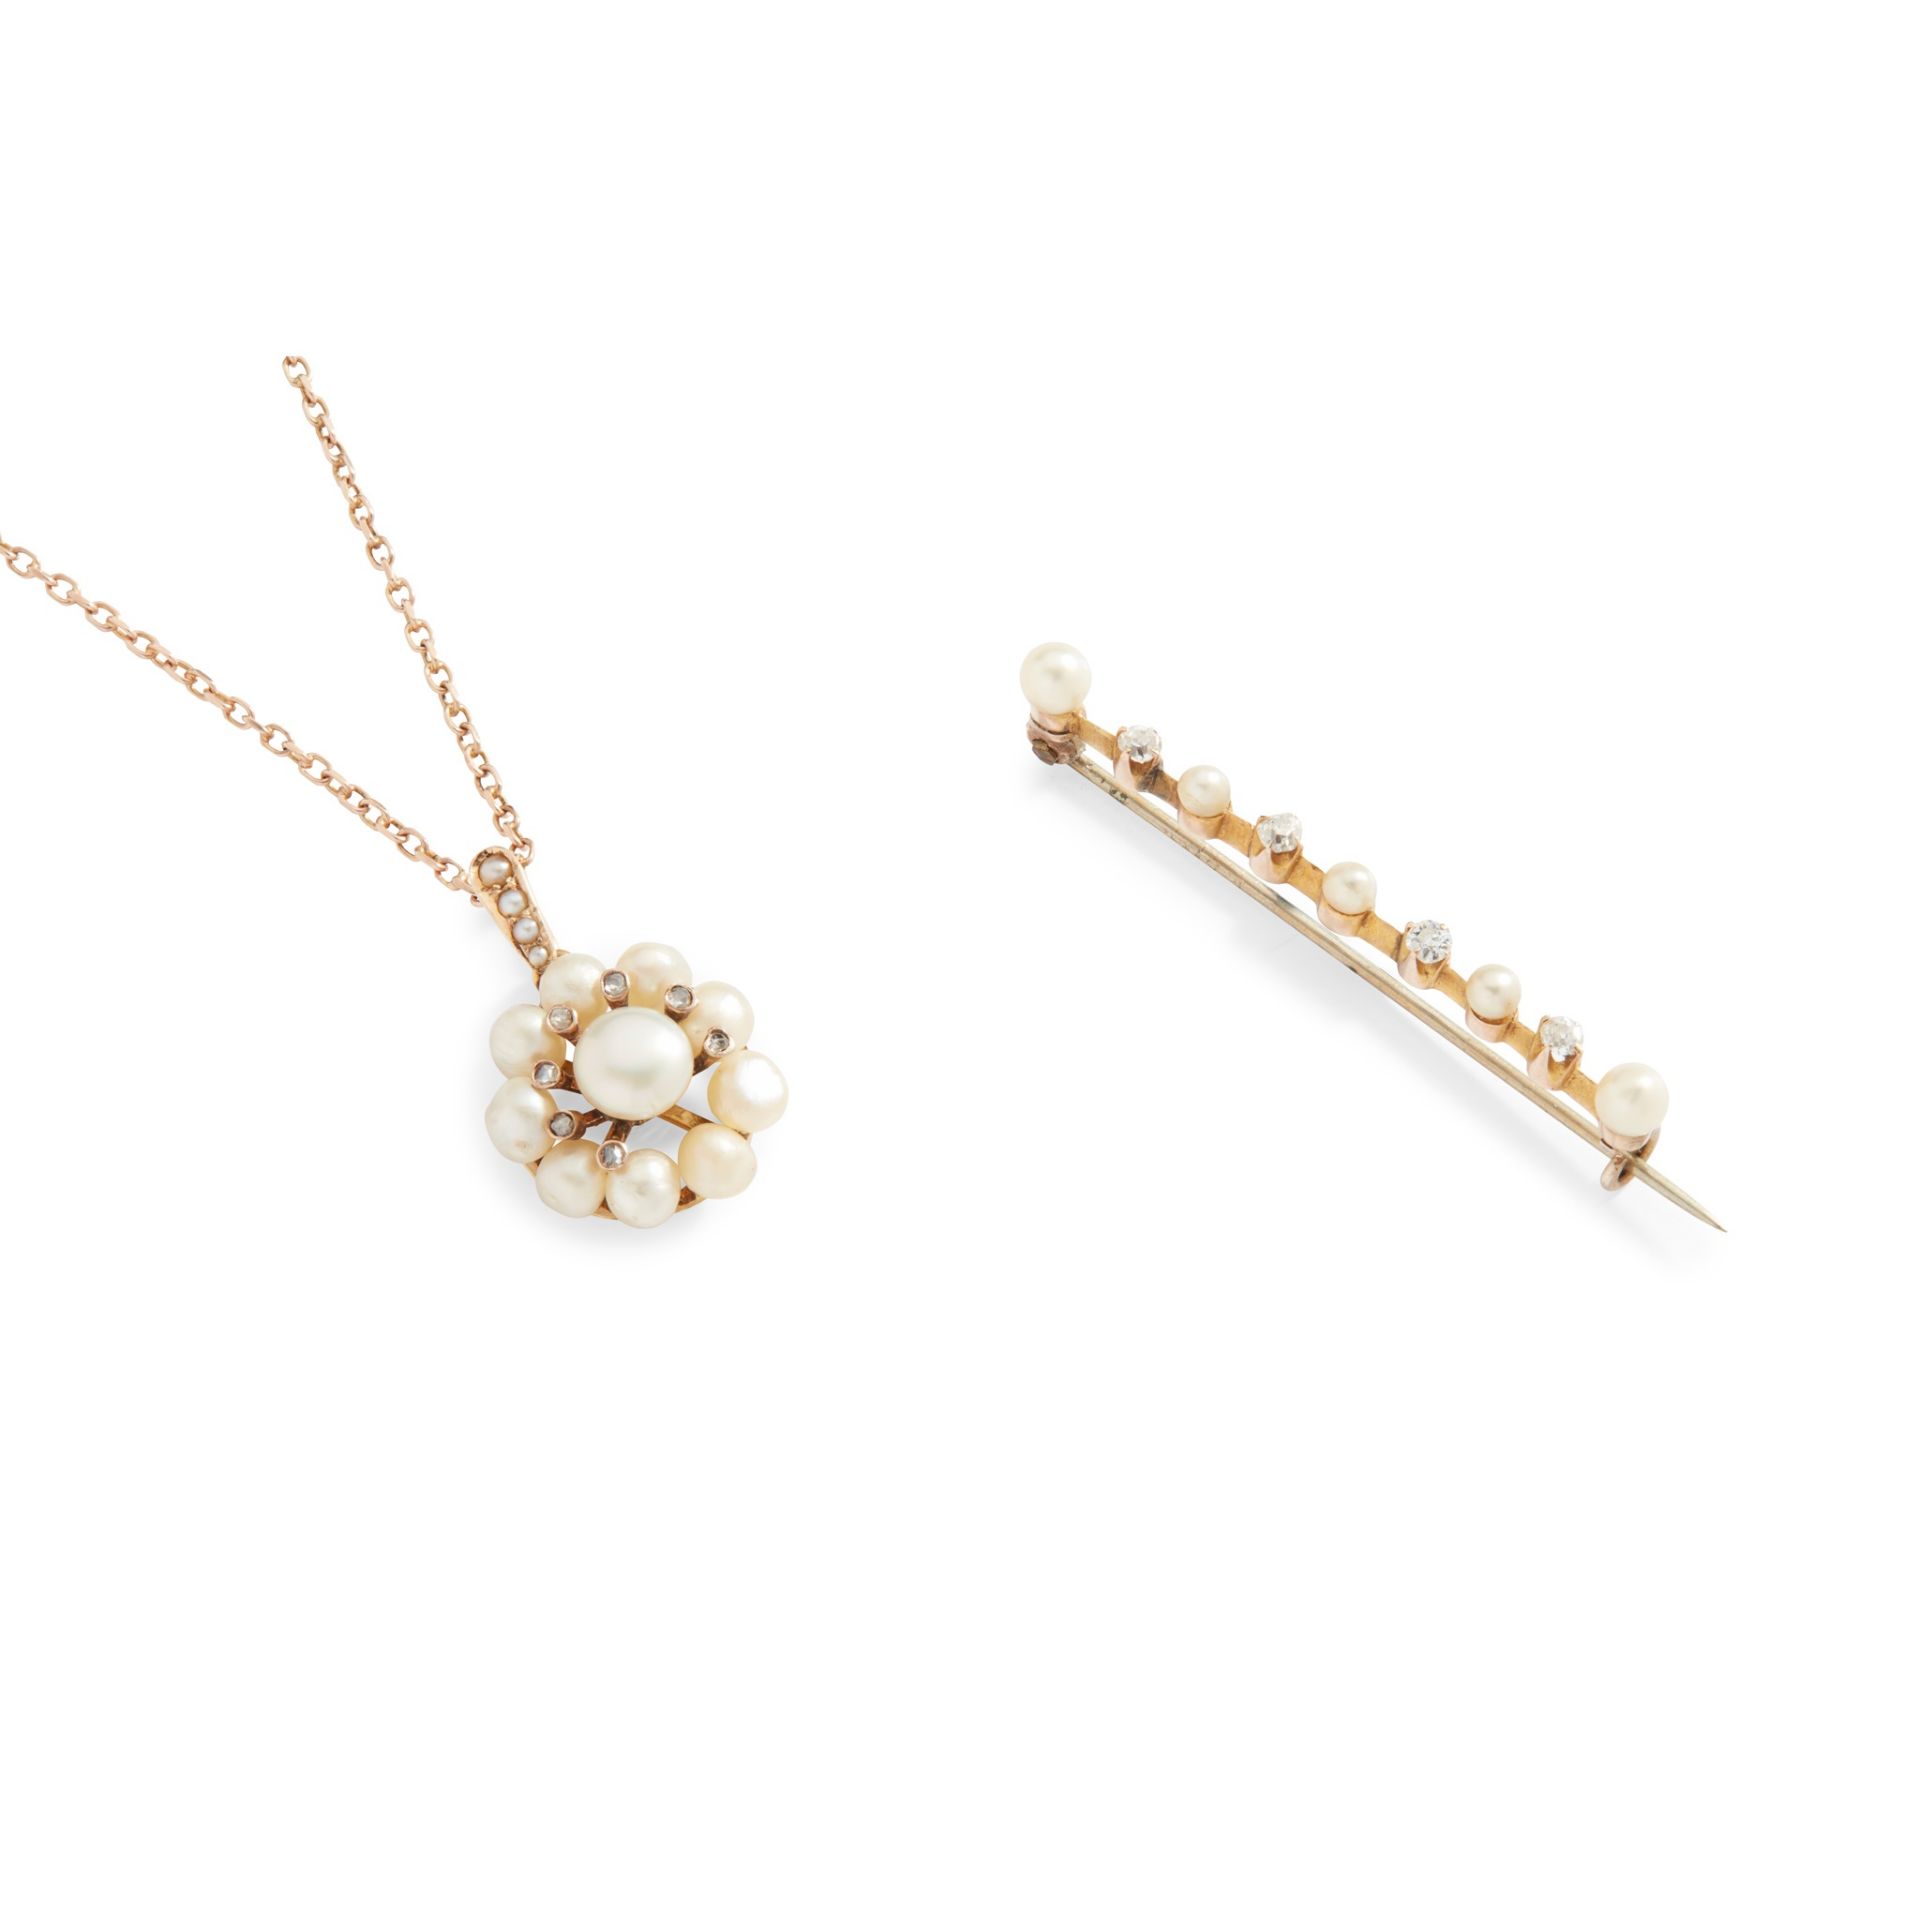 A pearl and diamond pendant